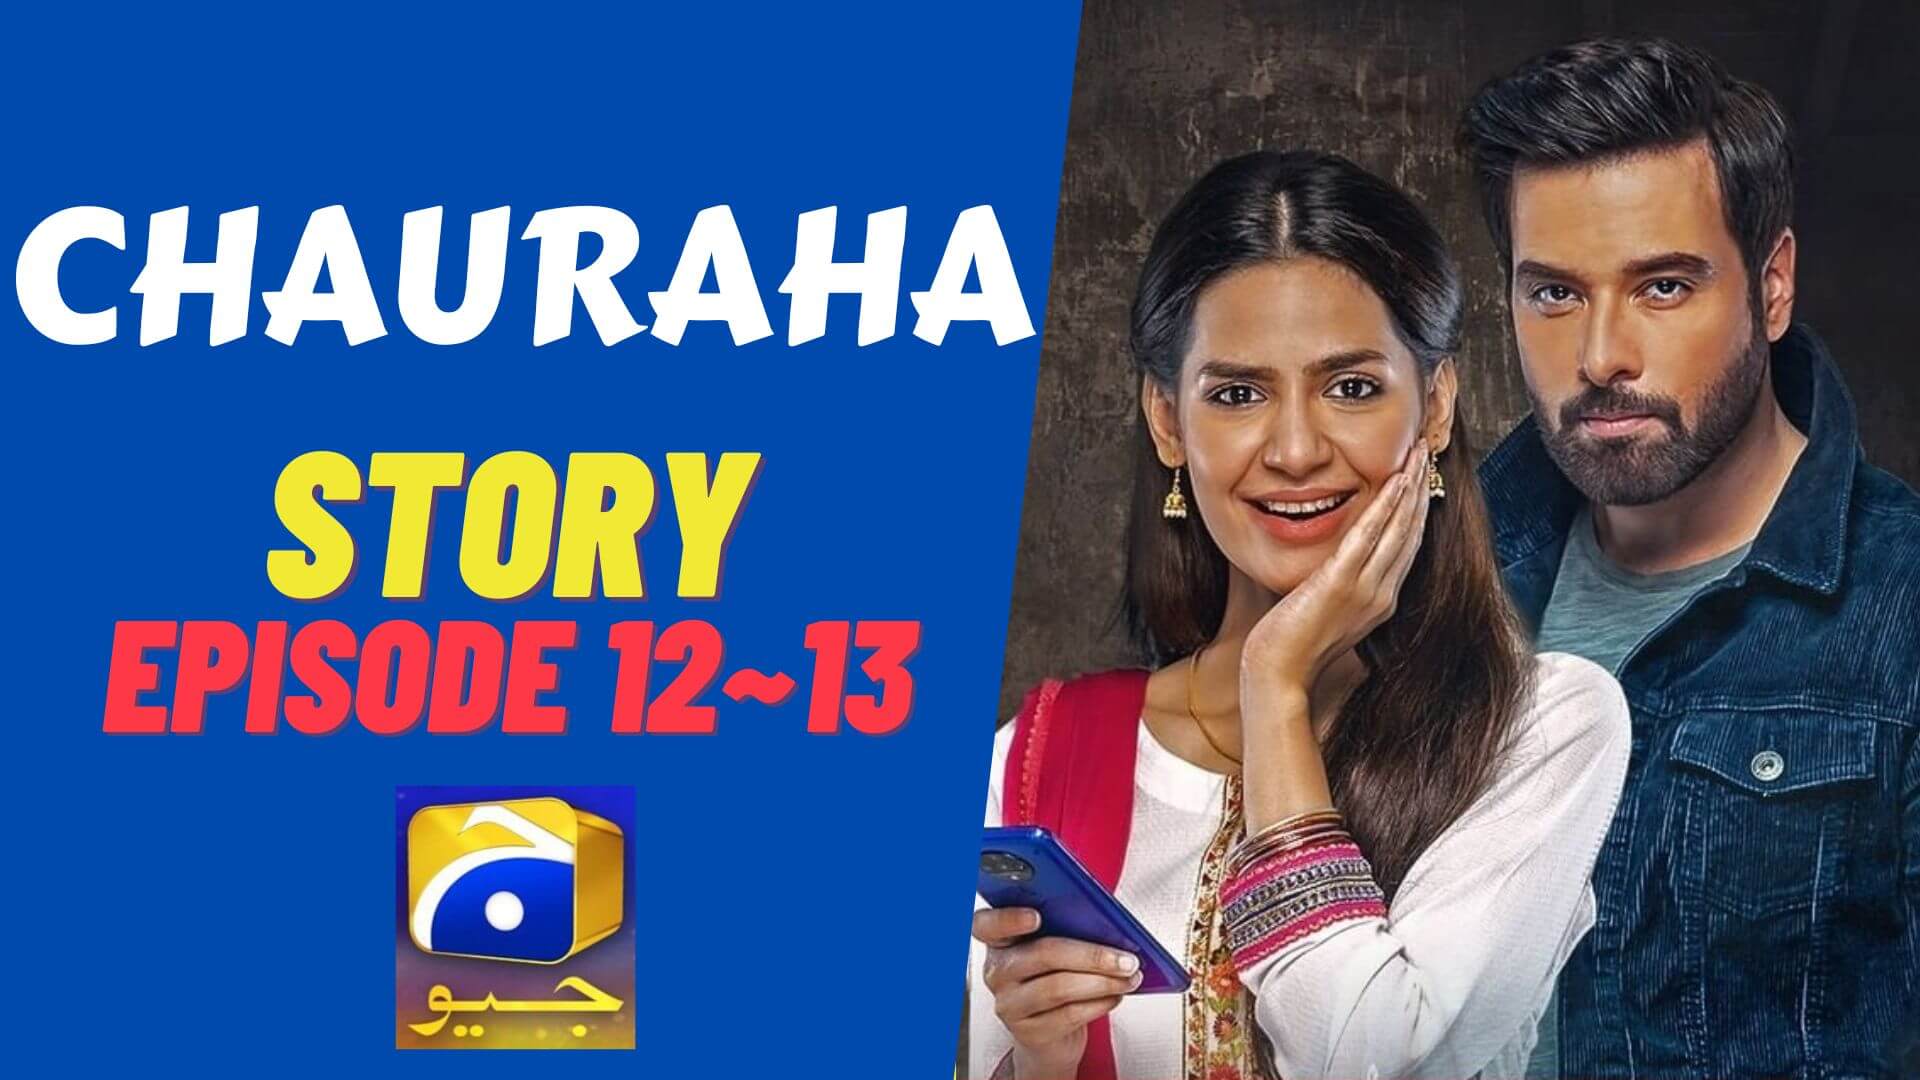 Chauraha Episode 12_13 Story